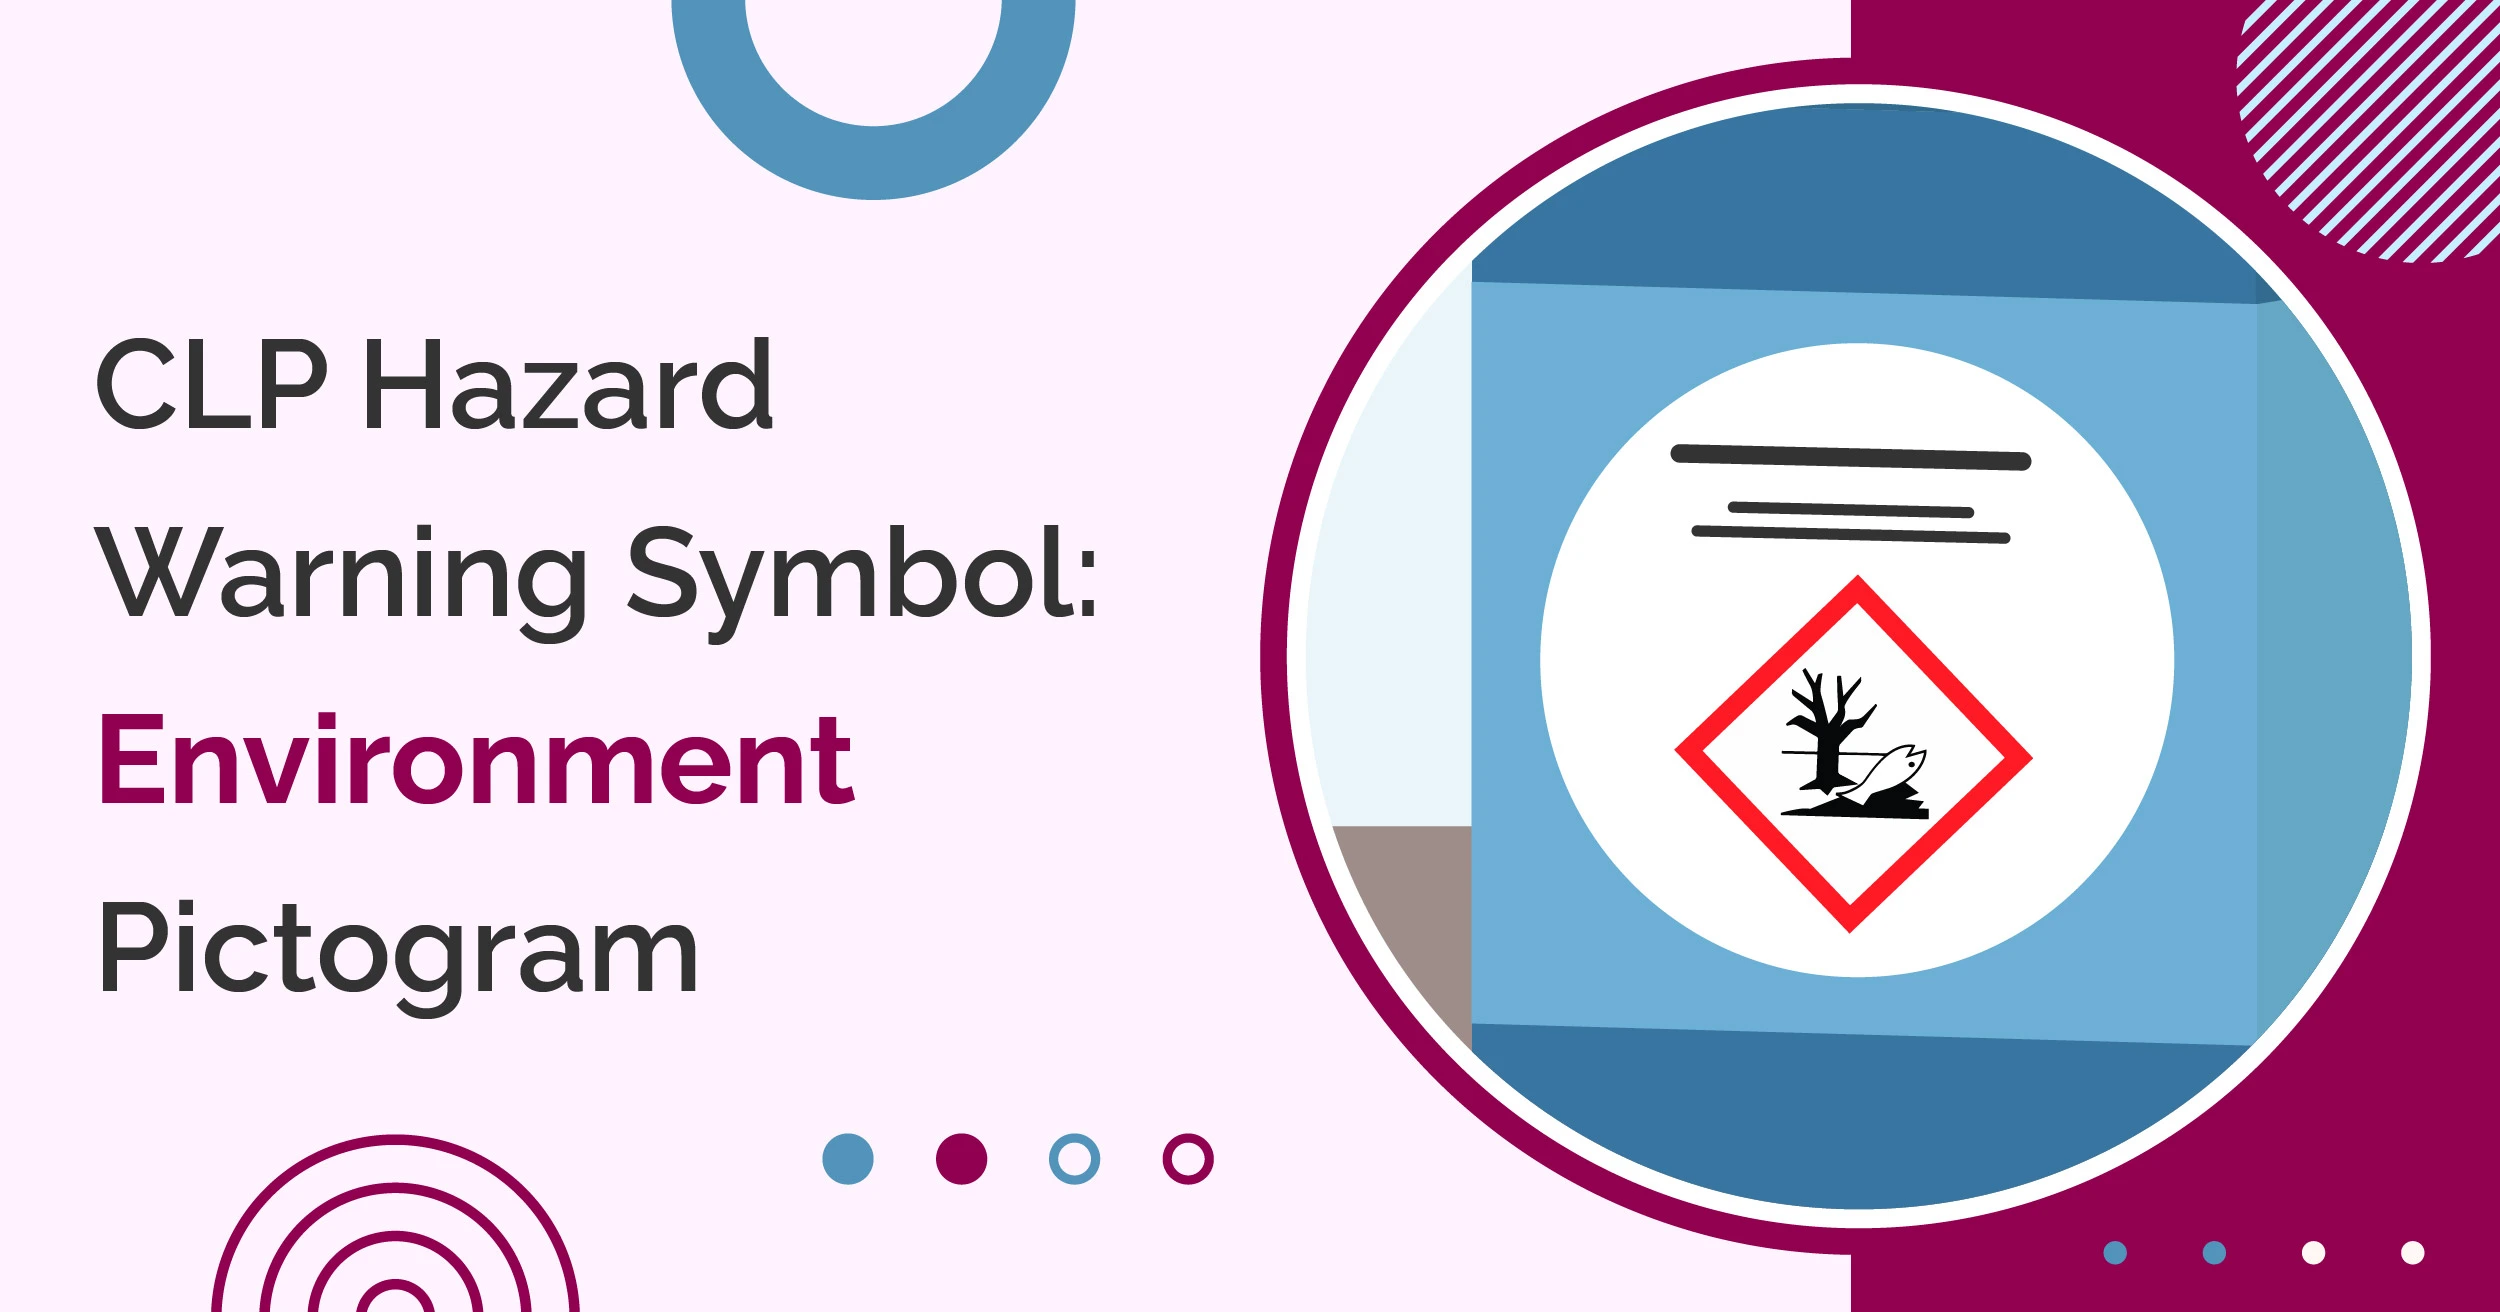 CLP Hazard Warning Symbol: Environment Pictogram